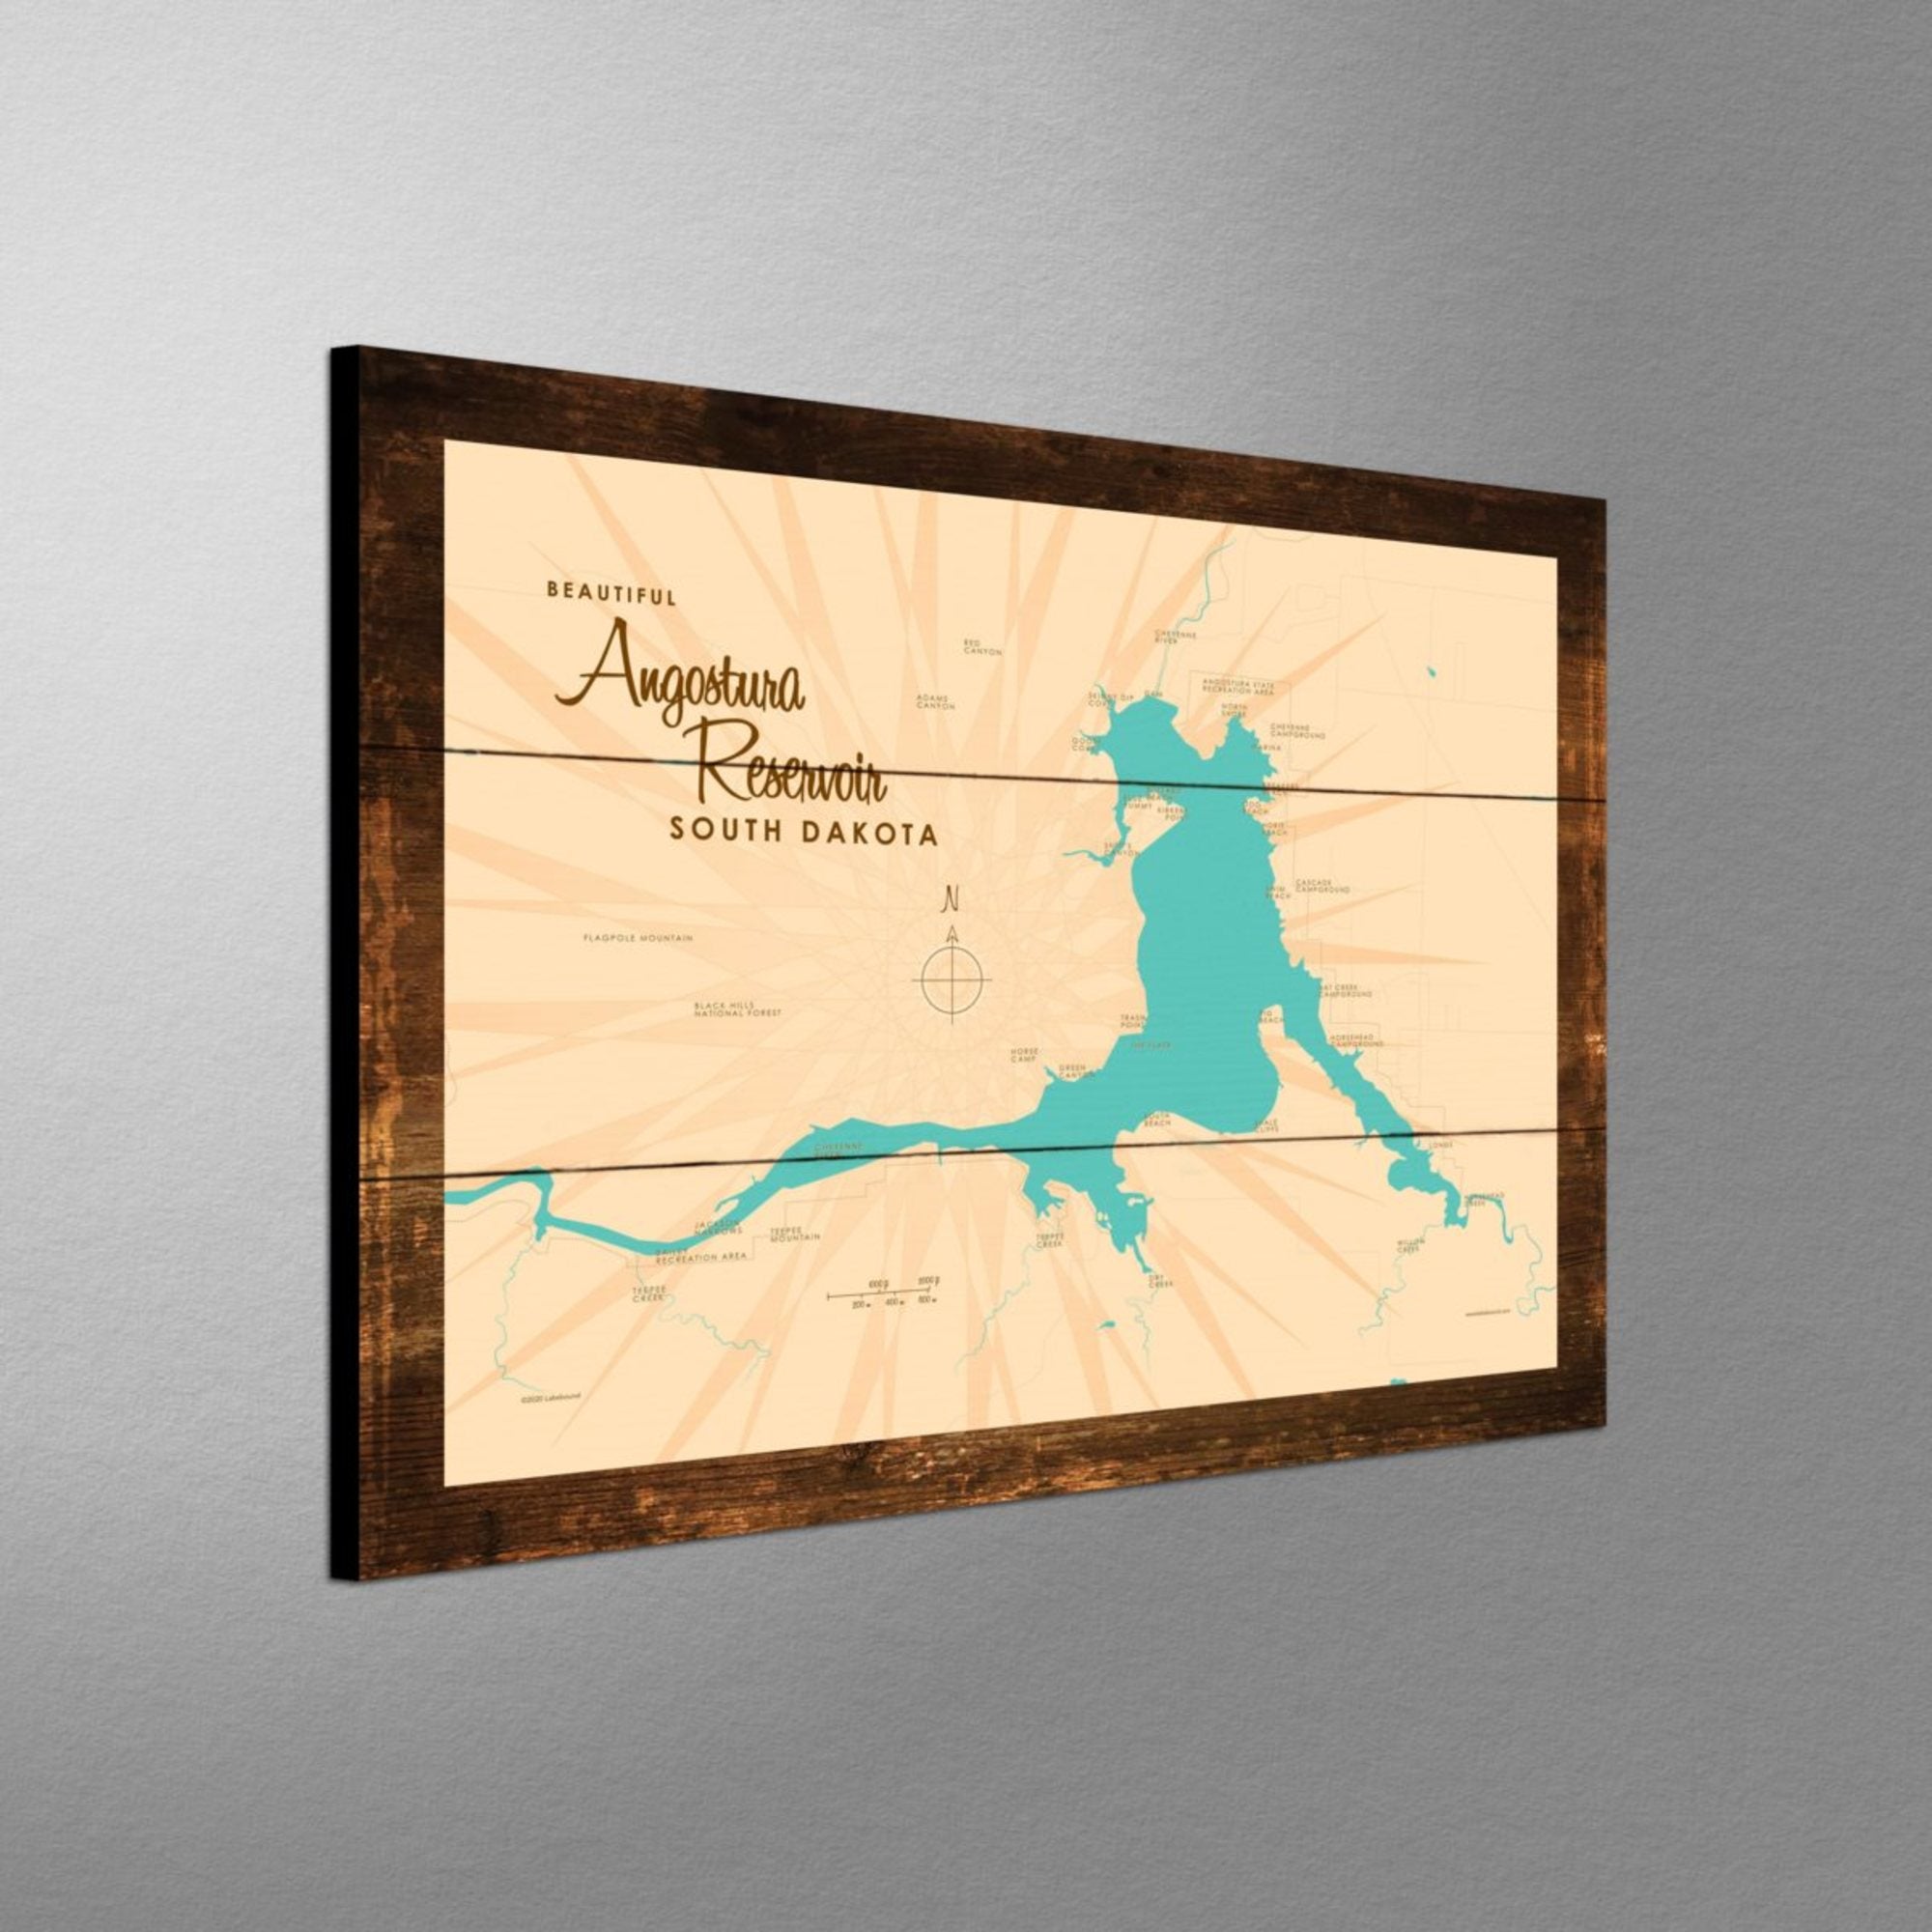 Angostura Reservoir South Dakota, Rustic Wood Sign Map Art